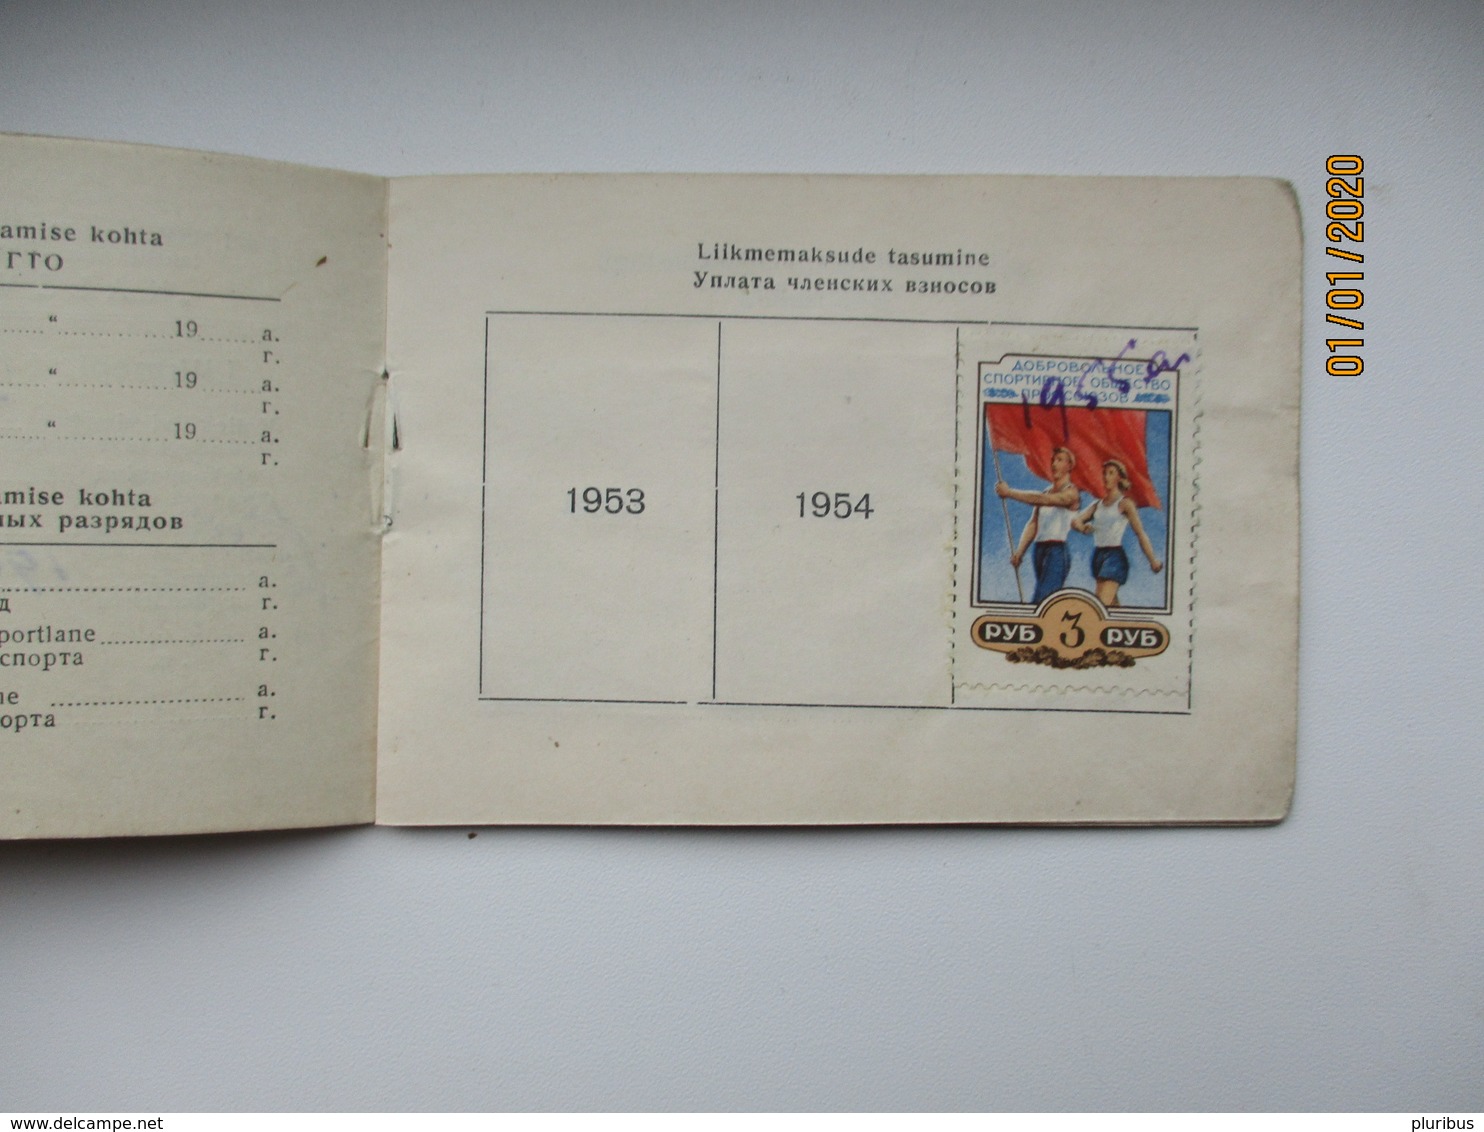 RUSSIA USSR ESTONIA REVENUE STAMPS SPORTS UNION KALEV MEMBER CARD 1955 , 0 - Revenue Stamps